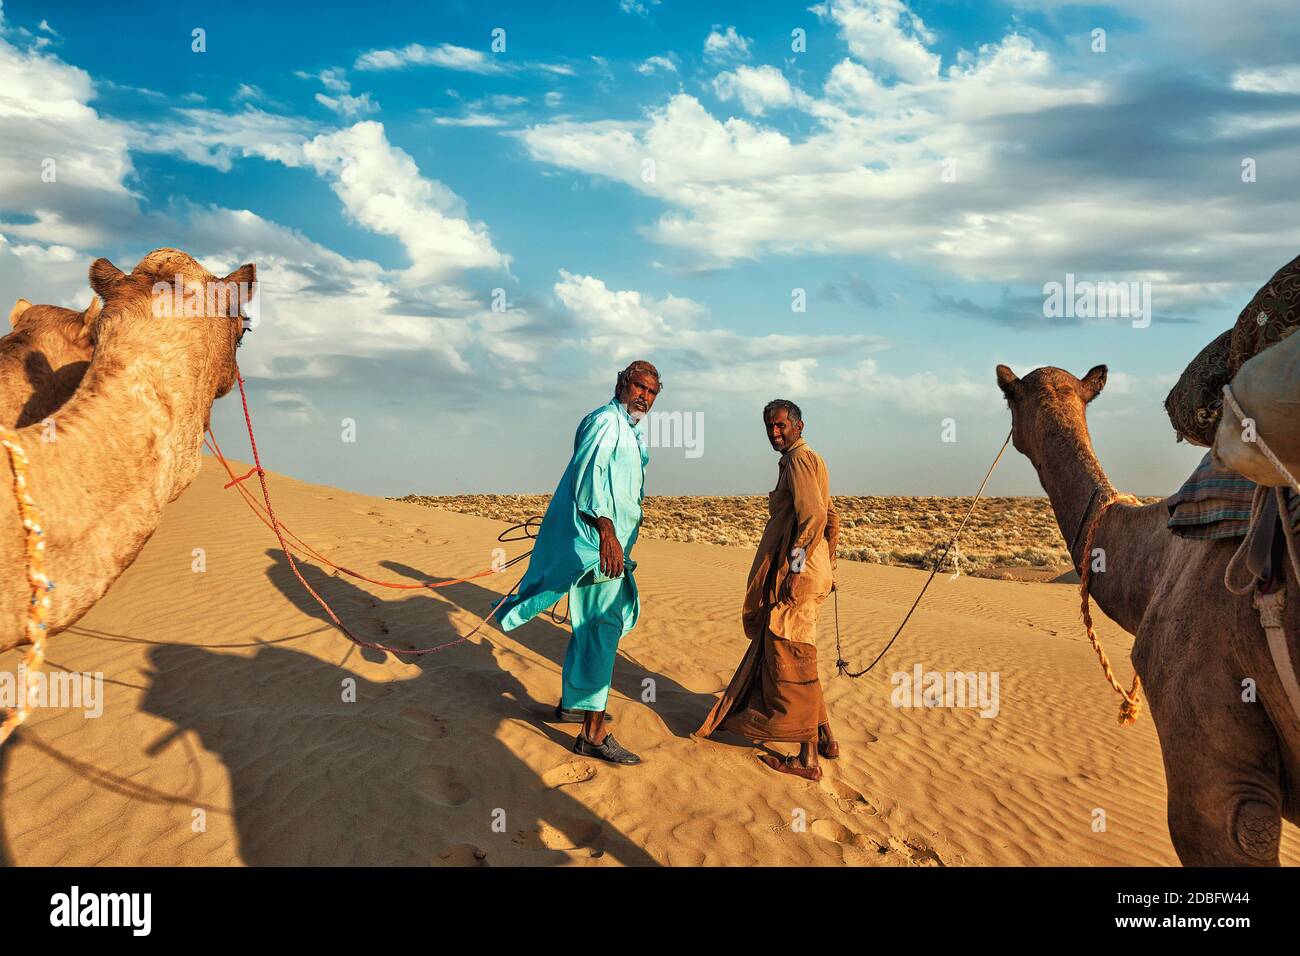 Rajasthan viaggio sfondo - due cammelli indiani (camel driver) con cammelli in dune del deserto di Thar. Jaisalmer, Rajasthan, India Foto Stock